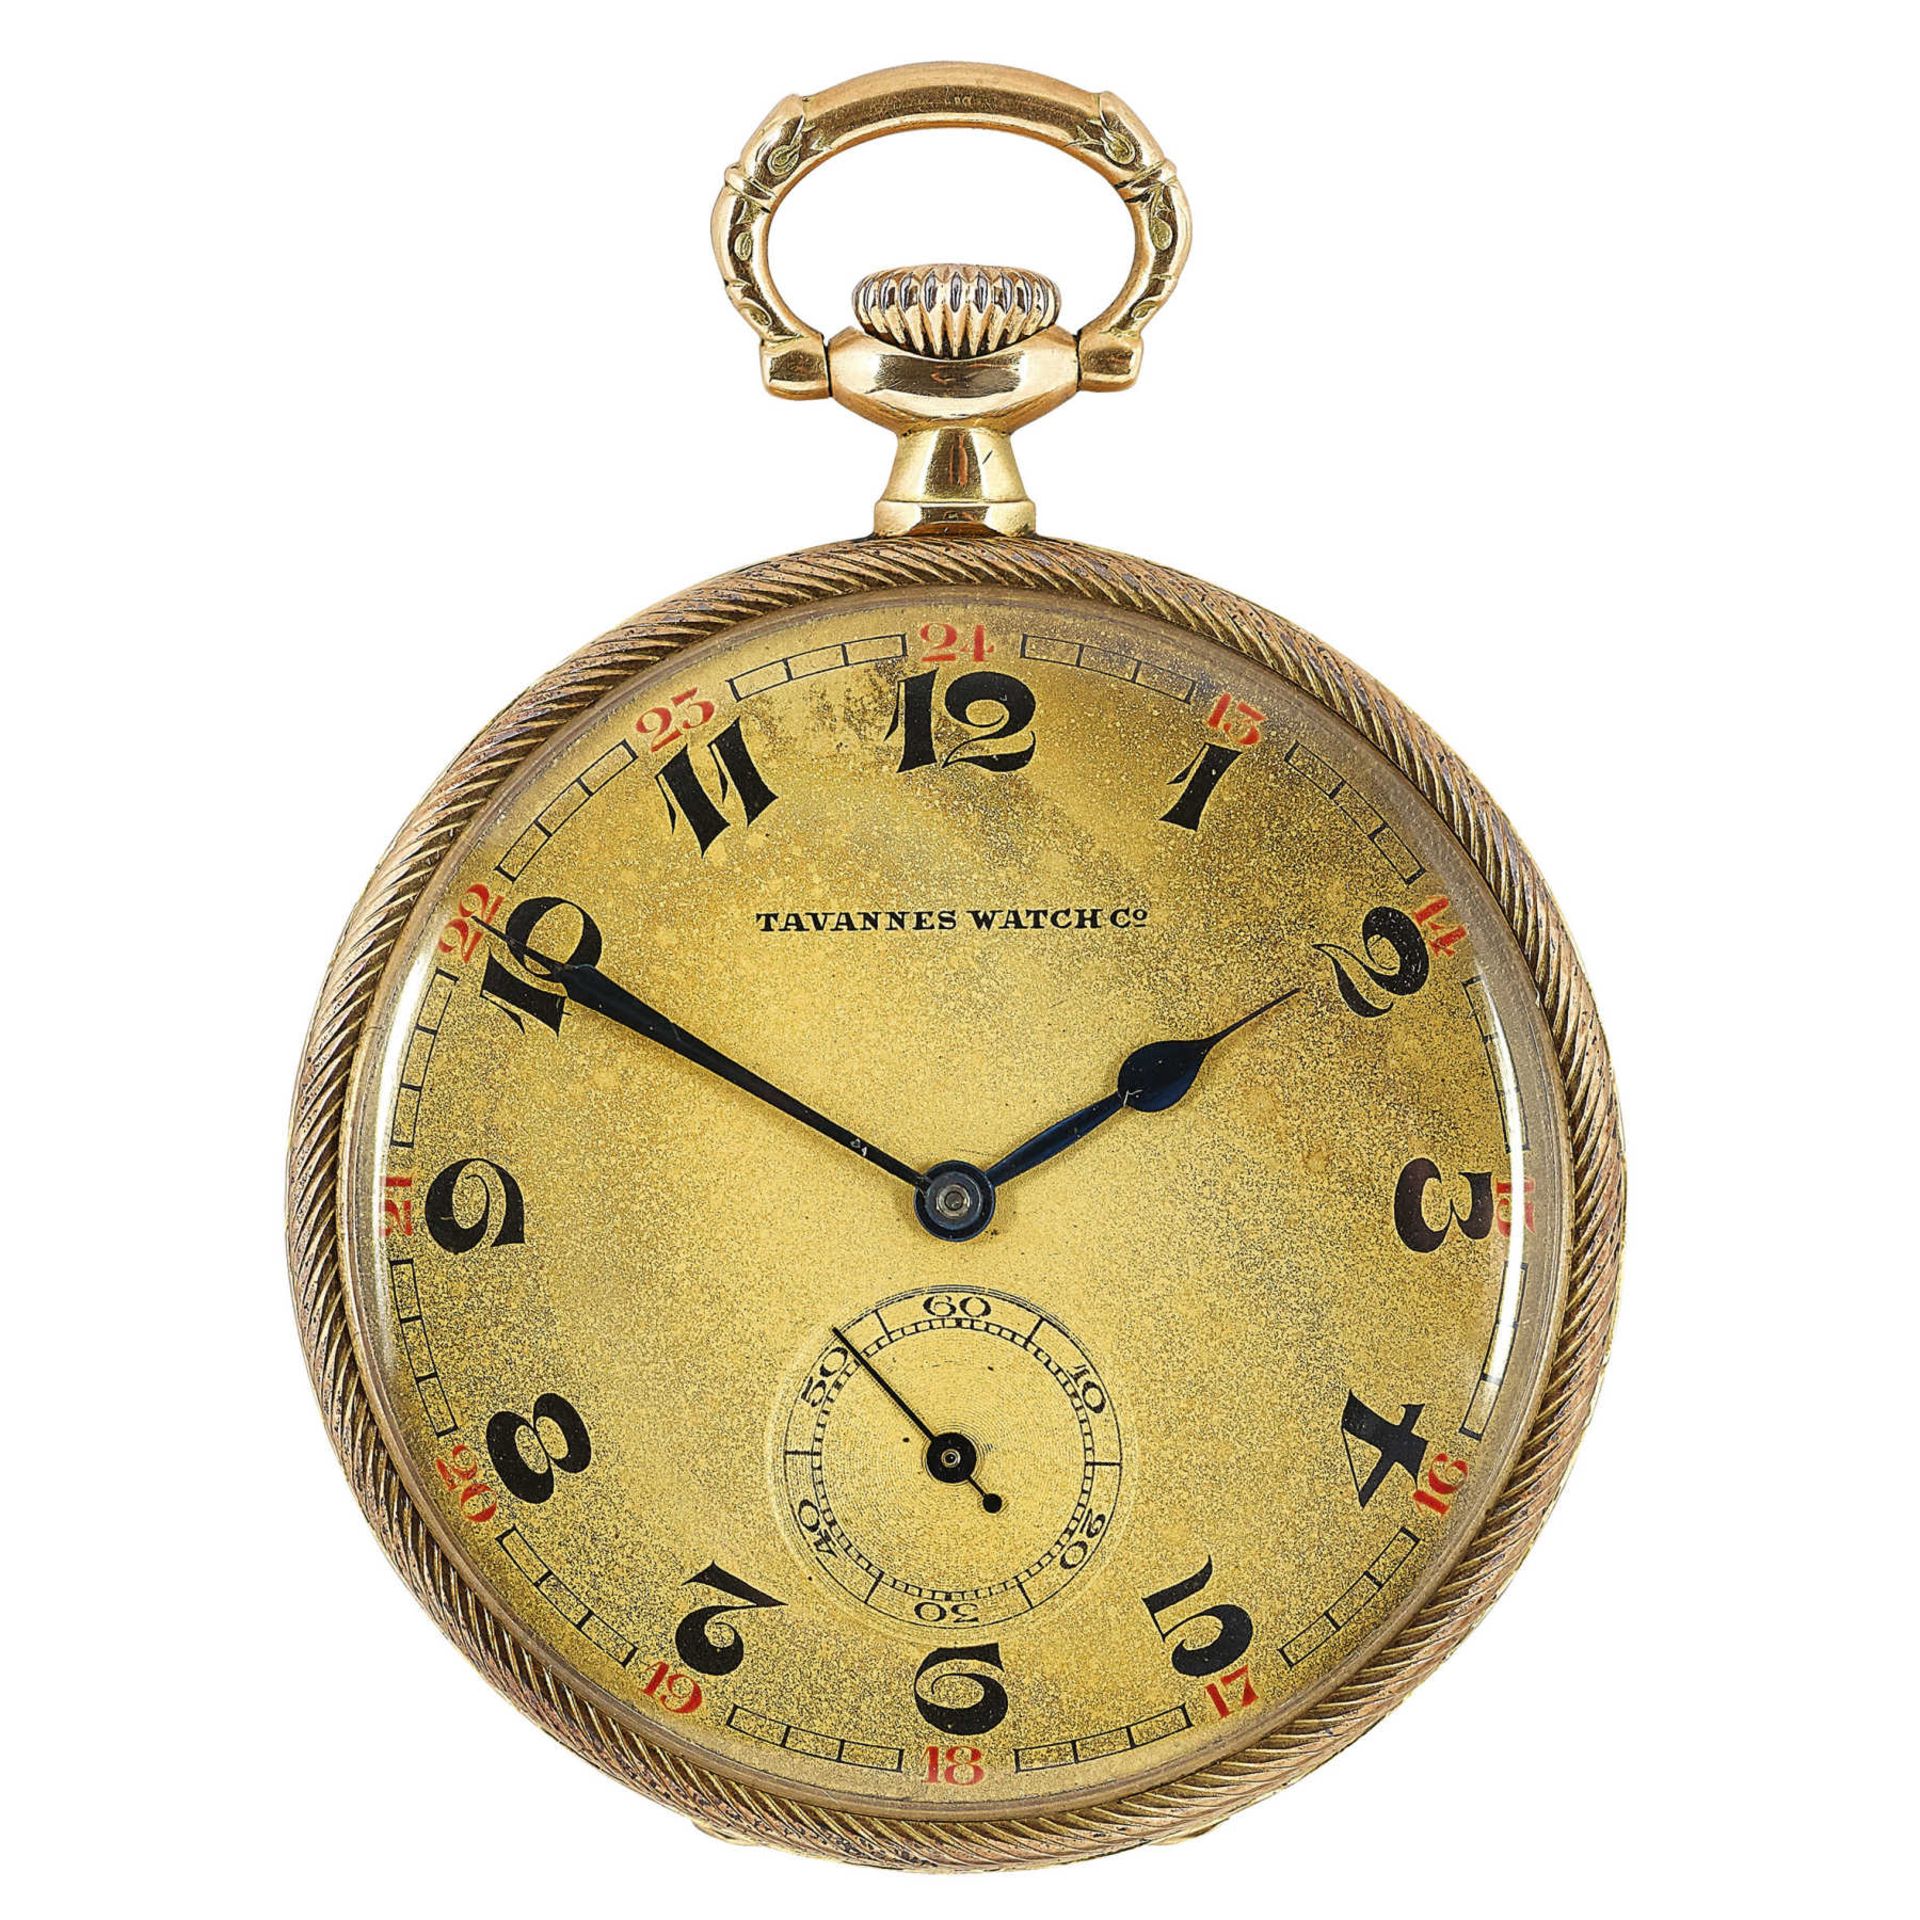 TAVANNES WATCH CO.Art Deco pocket watch.Manufacturer/Manufaktur: Tavannes Watch Co., Tavannes (